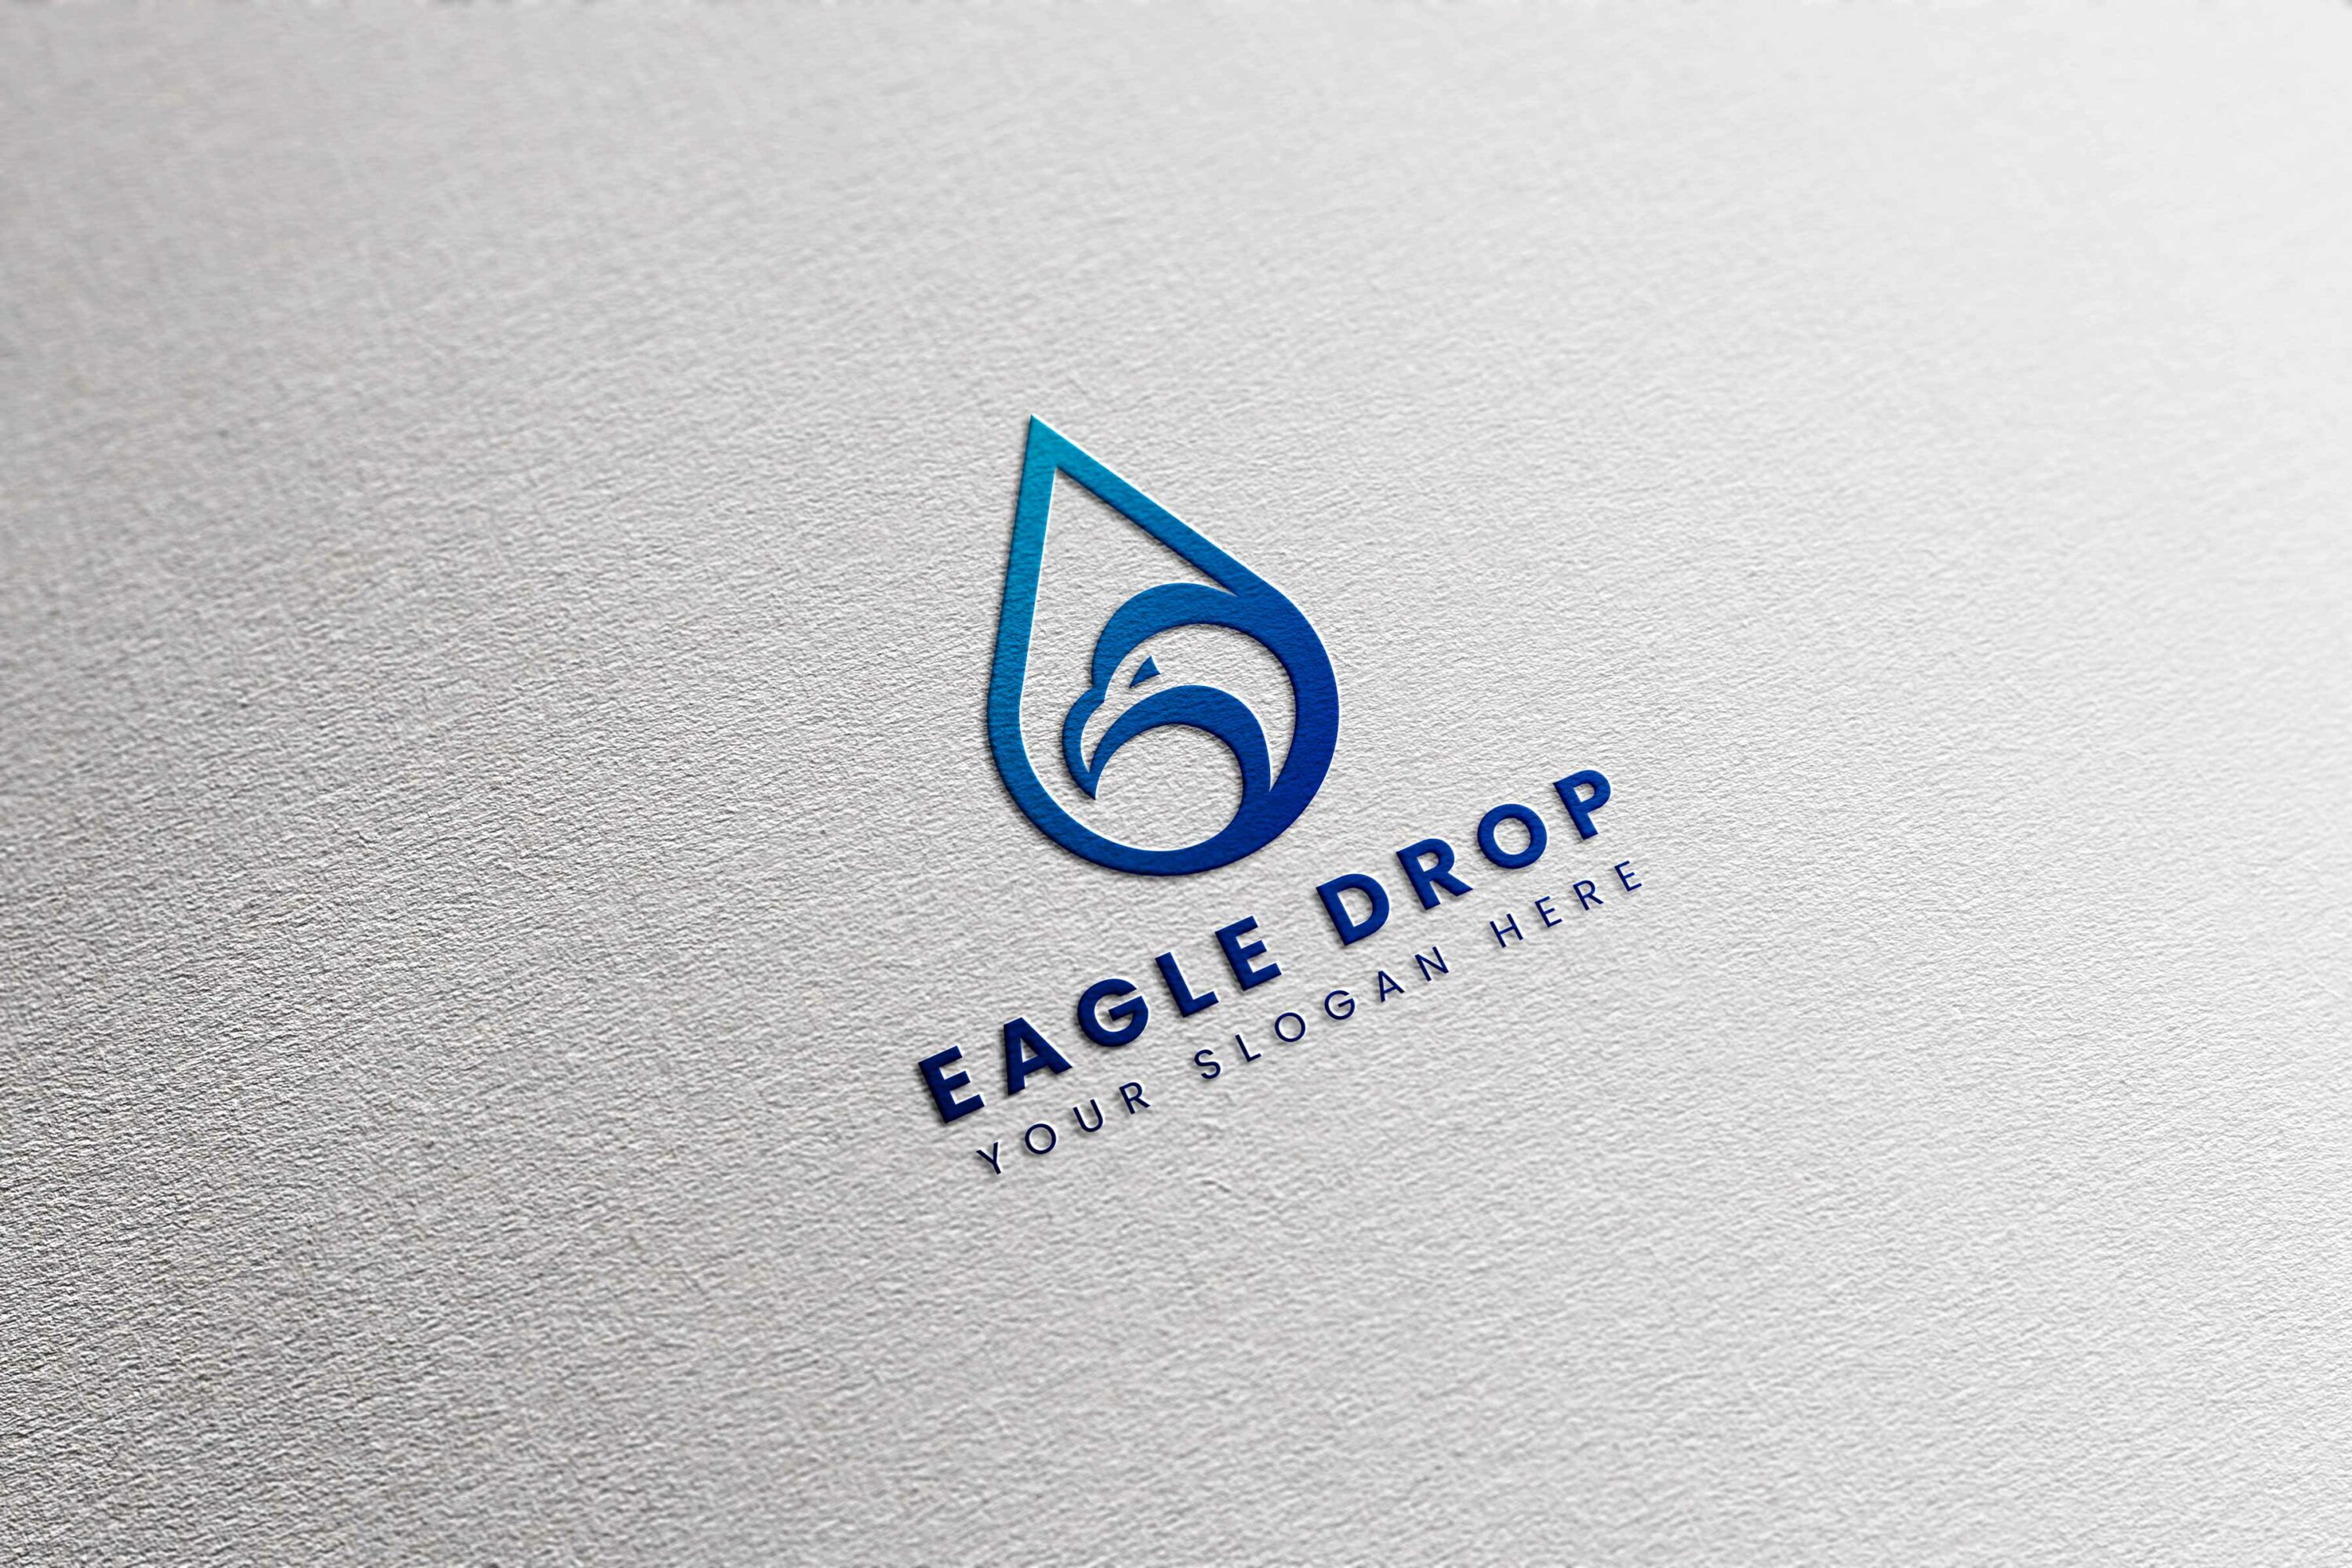 Eagle Drop Logo Template cover image.